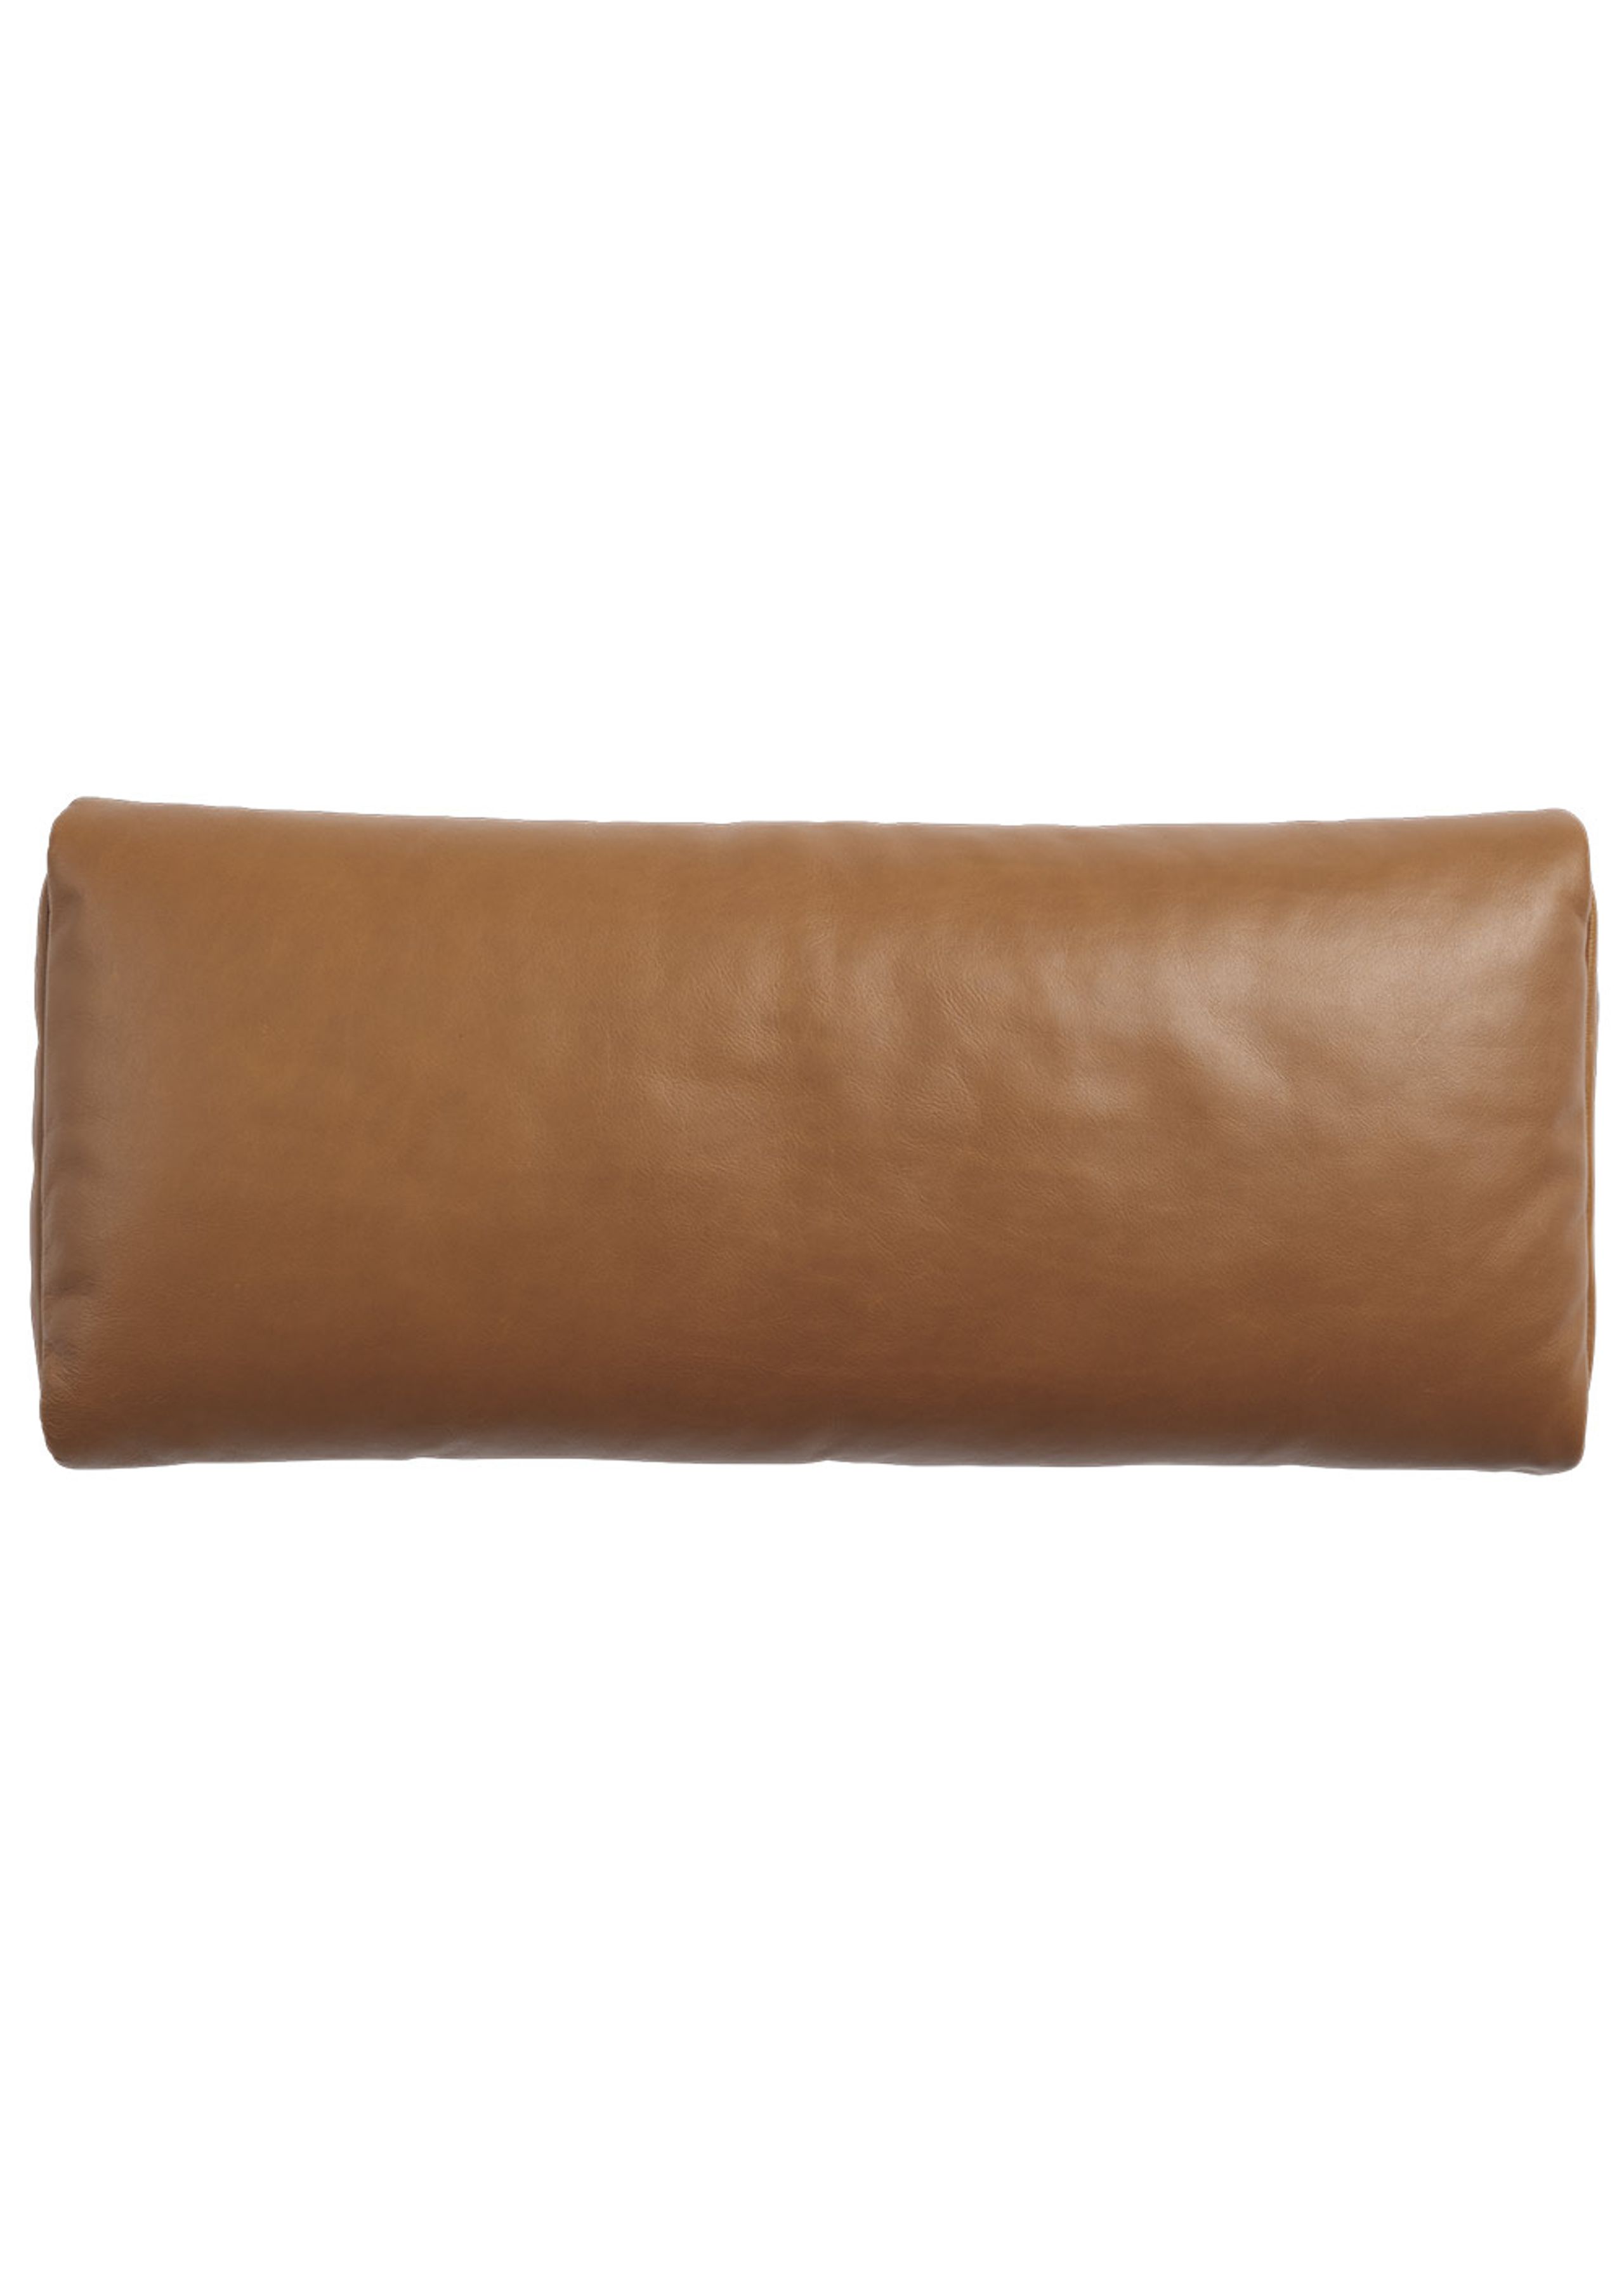 Muuto - Lit de jour - Outline Daybed - Frame: Polished Aluminium / Fabric: Cognac Refine Leather w. Cushion